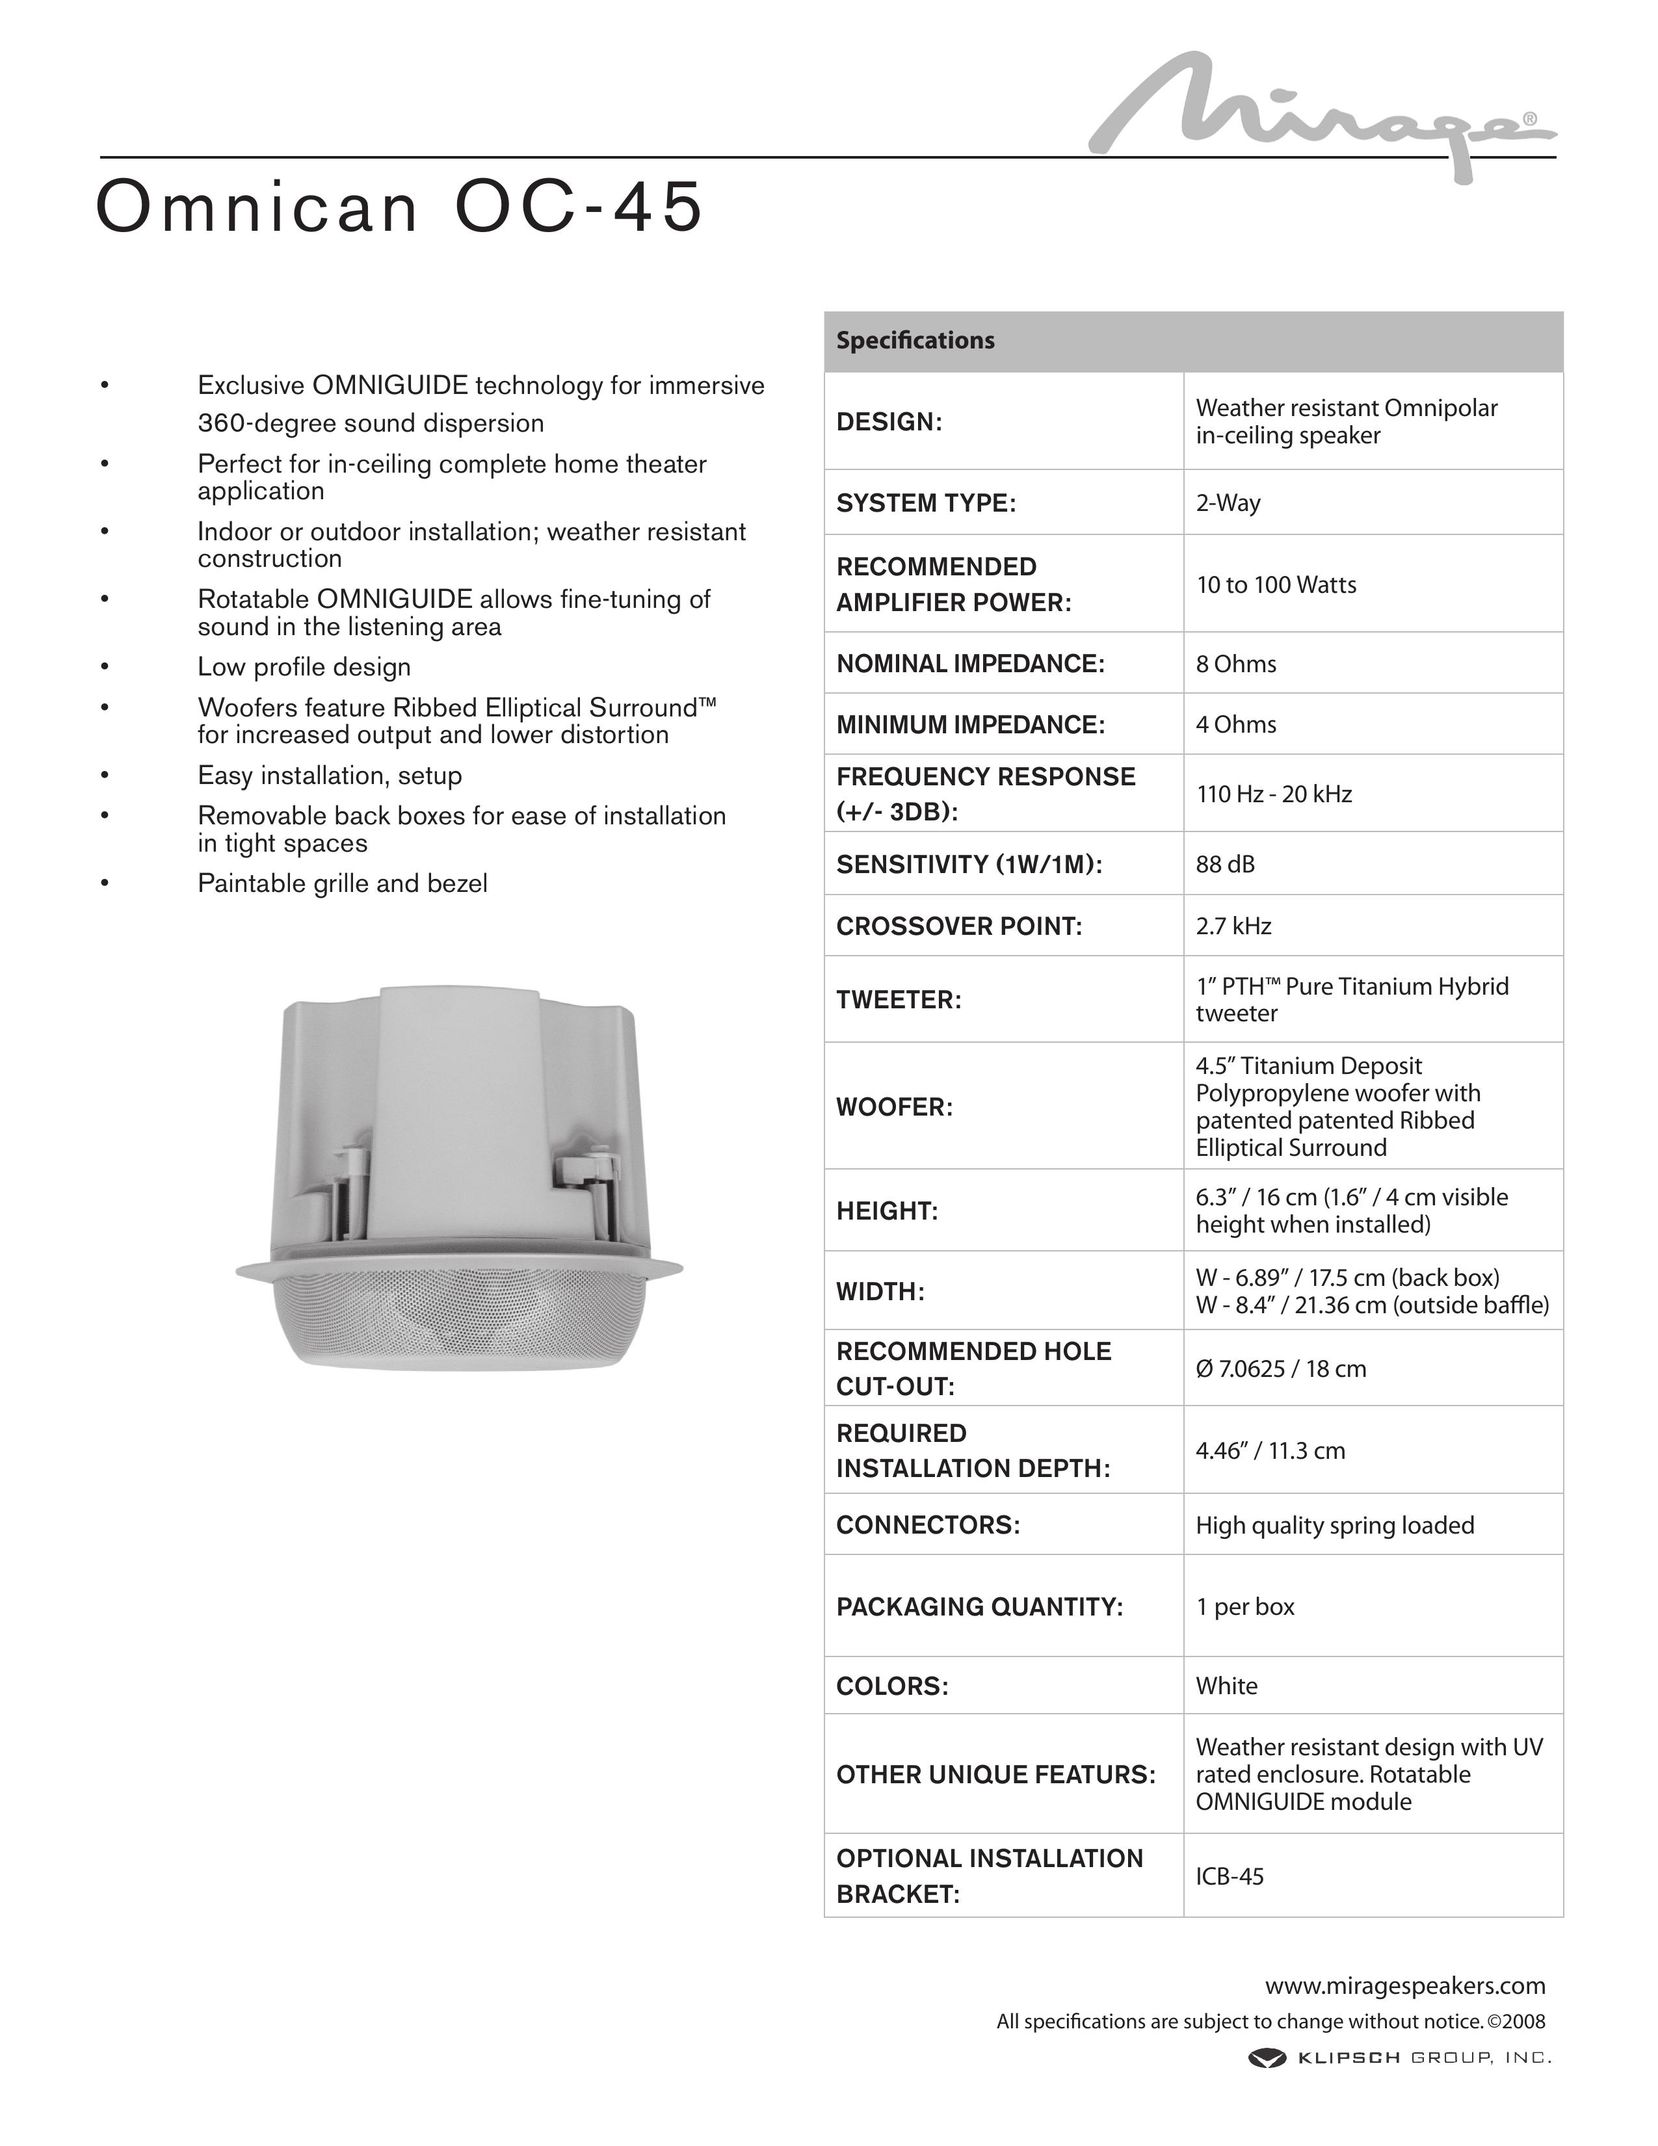 Mirage Loudspeakers OC-45 Speaker User Manual